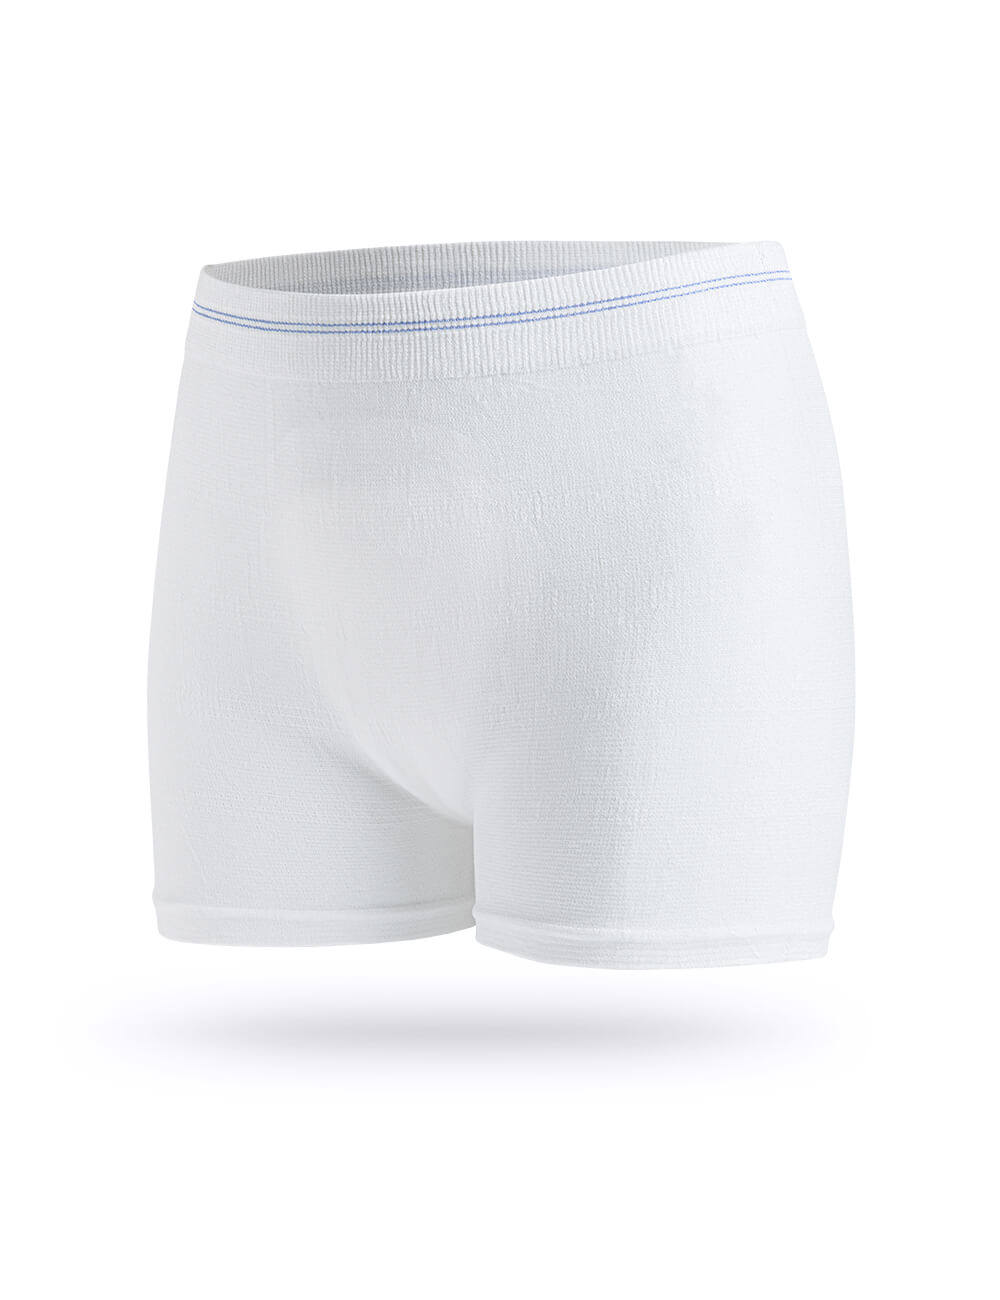 Disposable Postpartum Underwear 10 Pack Mesh Australia